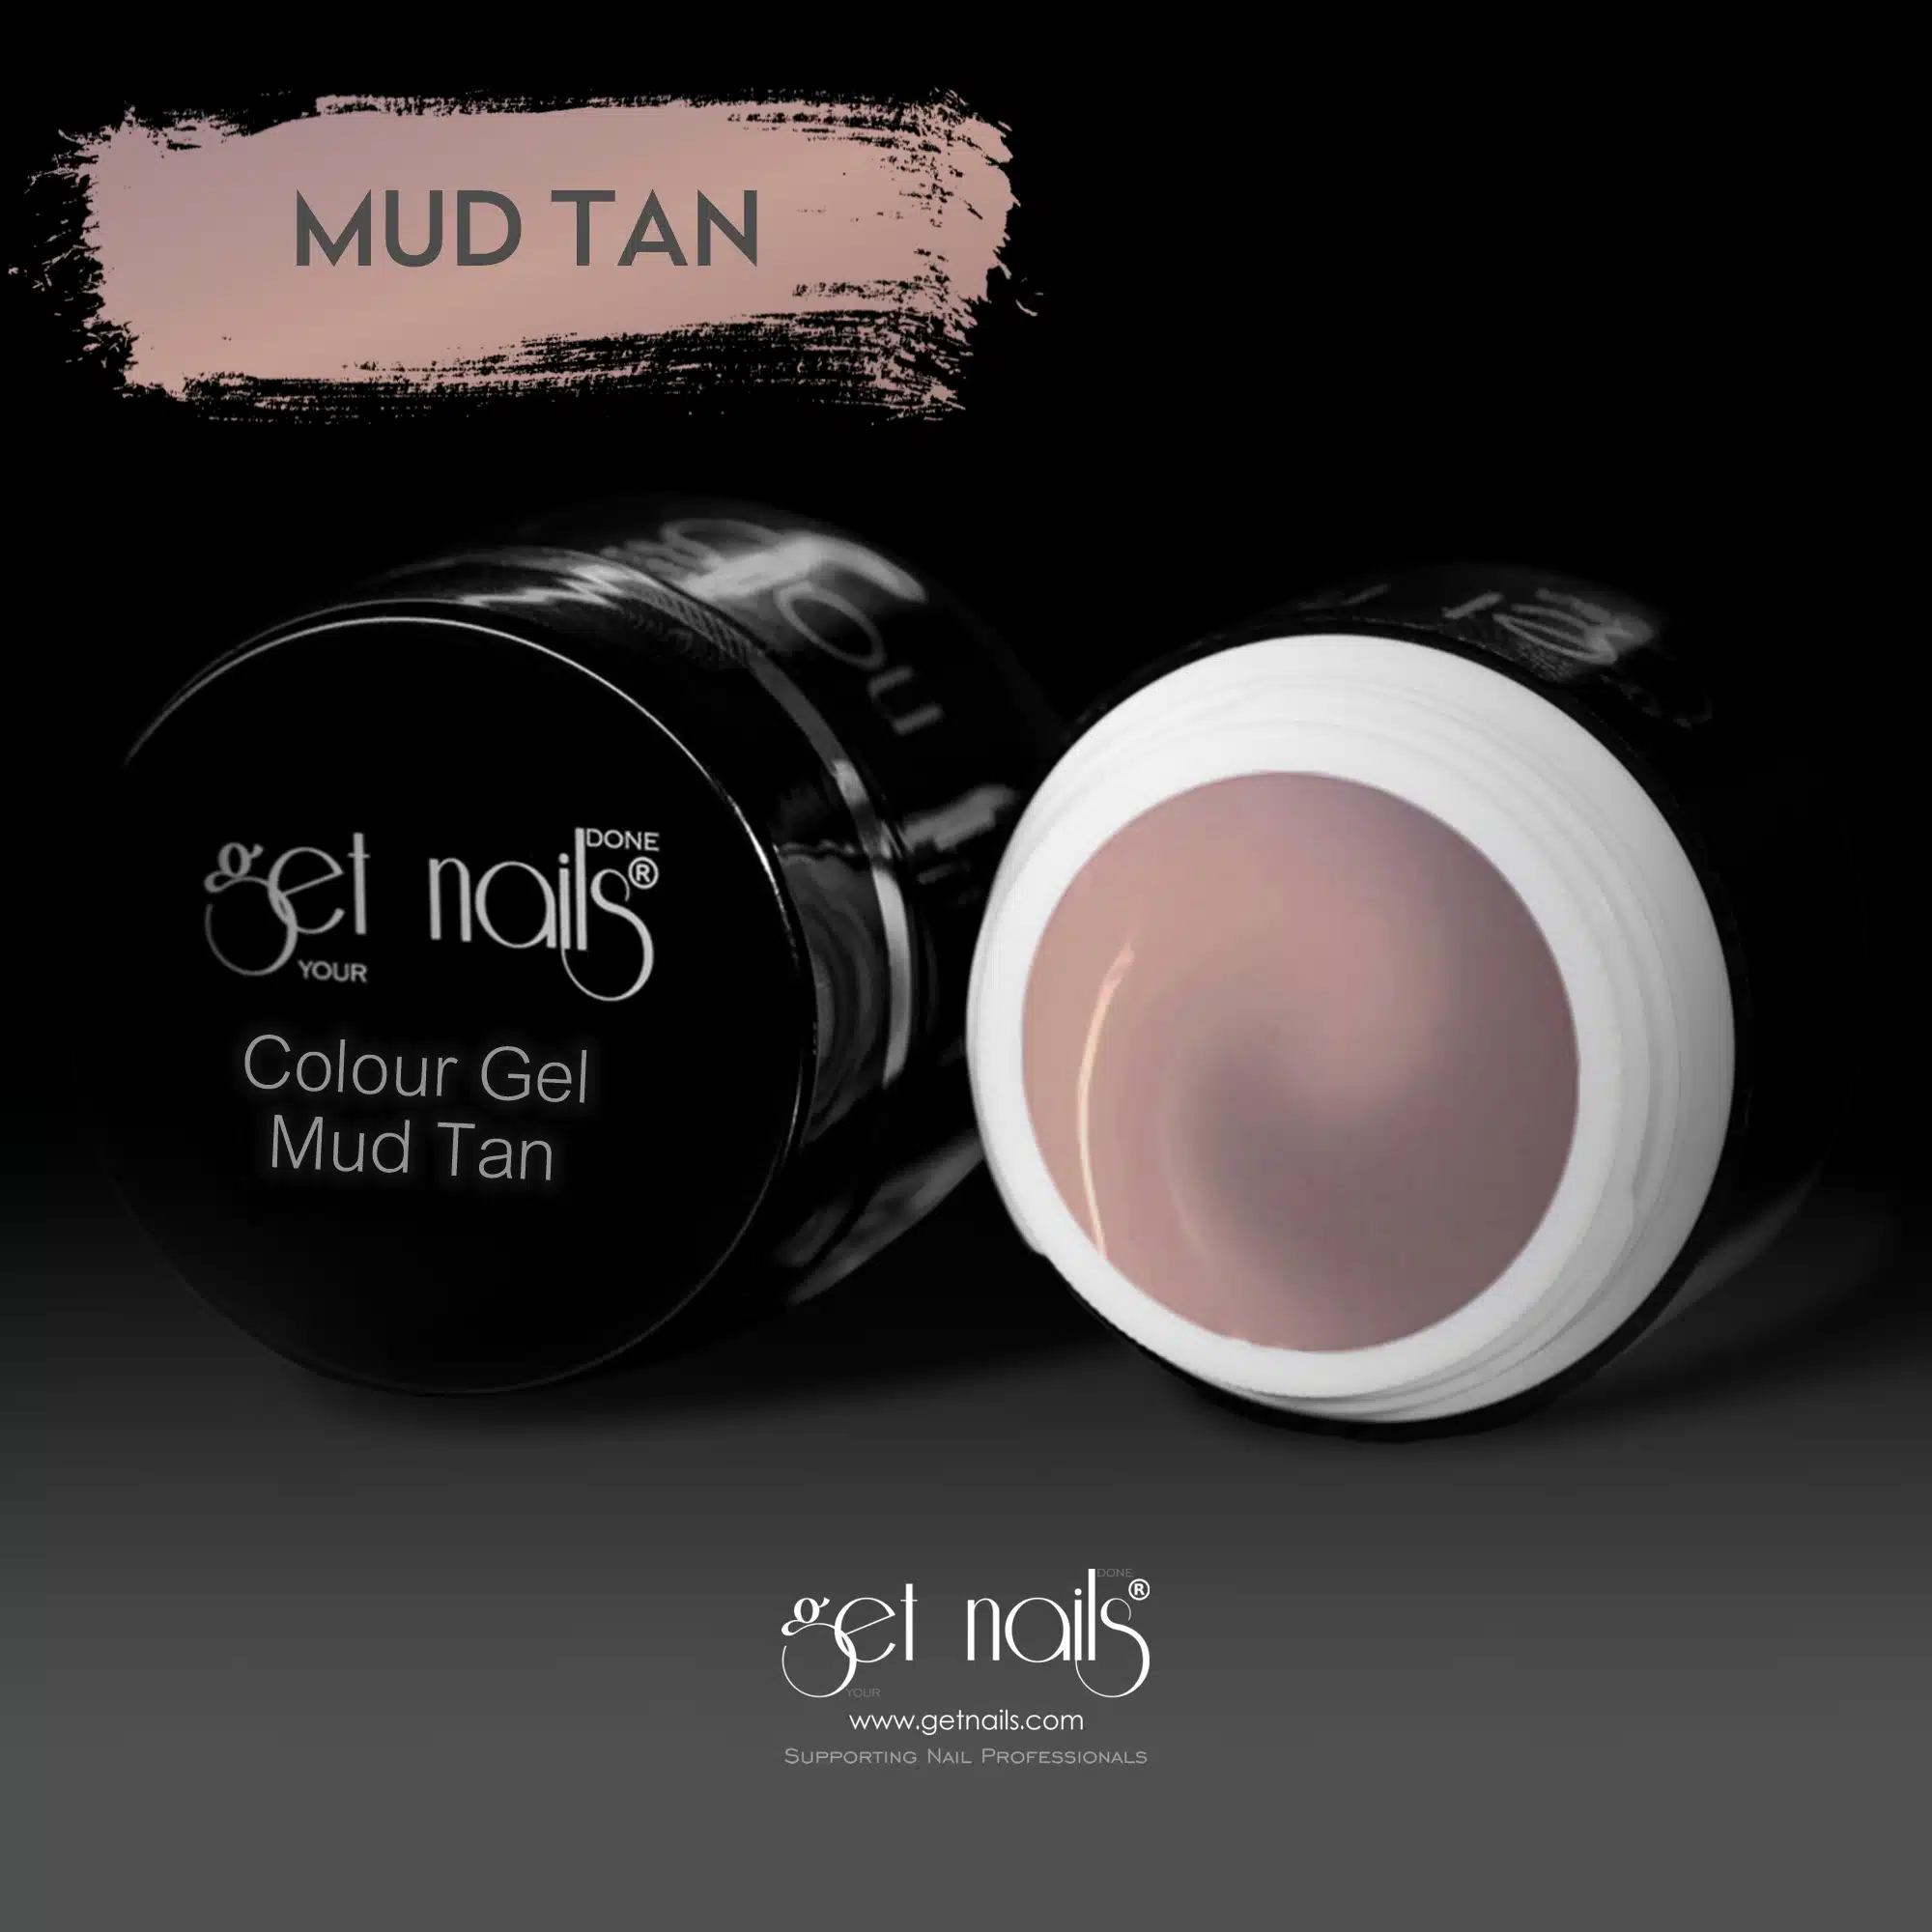 Get Nails Austria - Цветной гель Mud Tan 5g